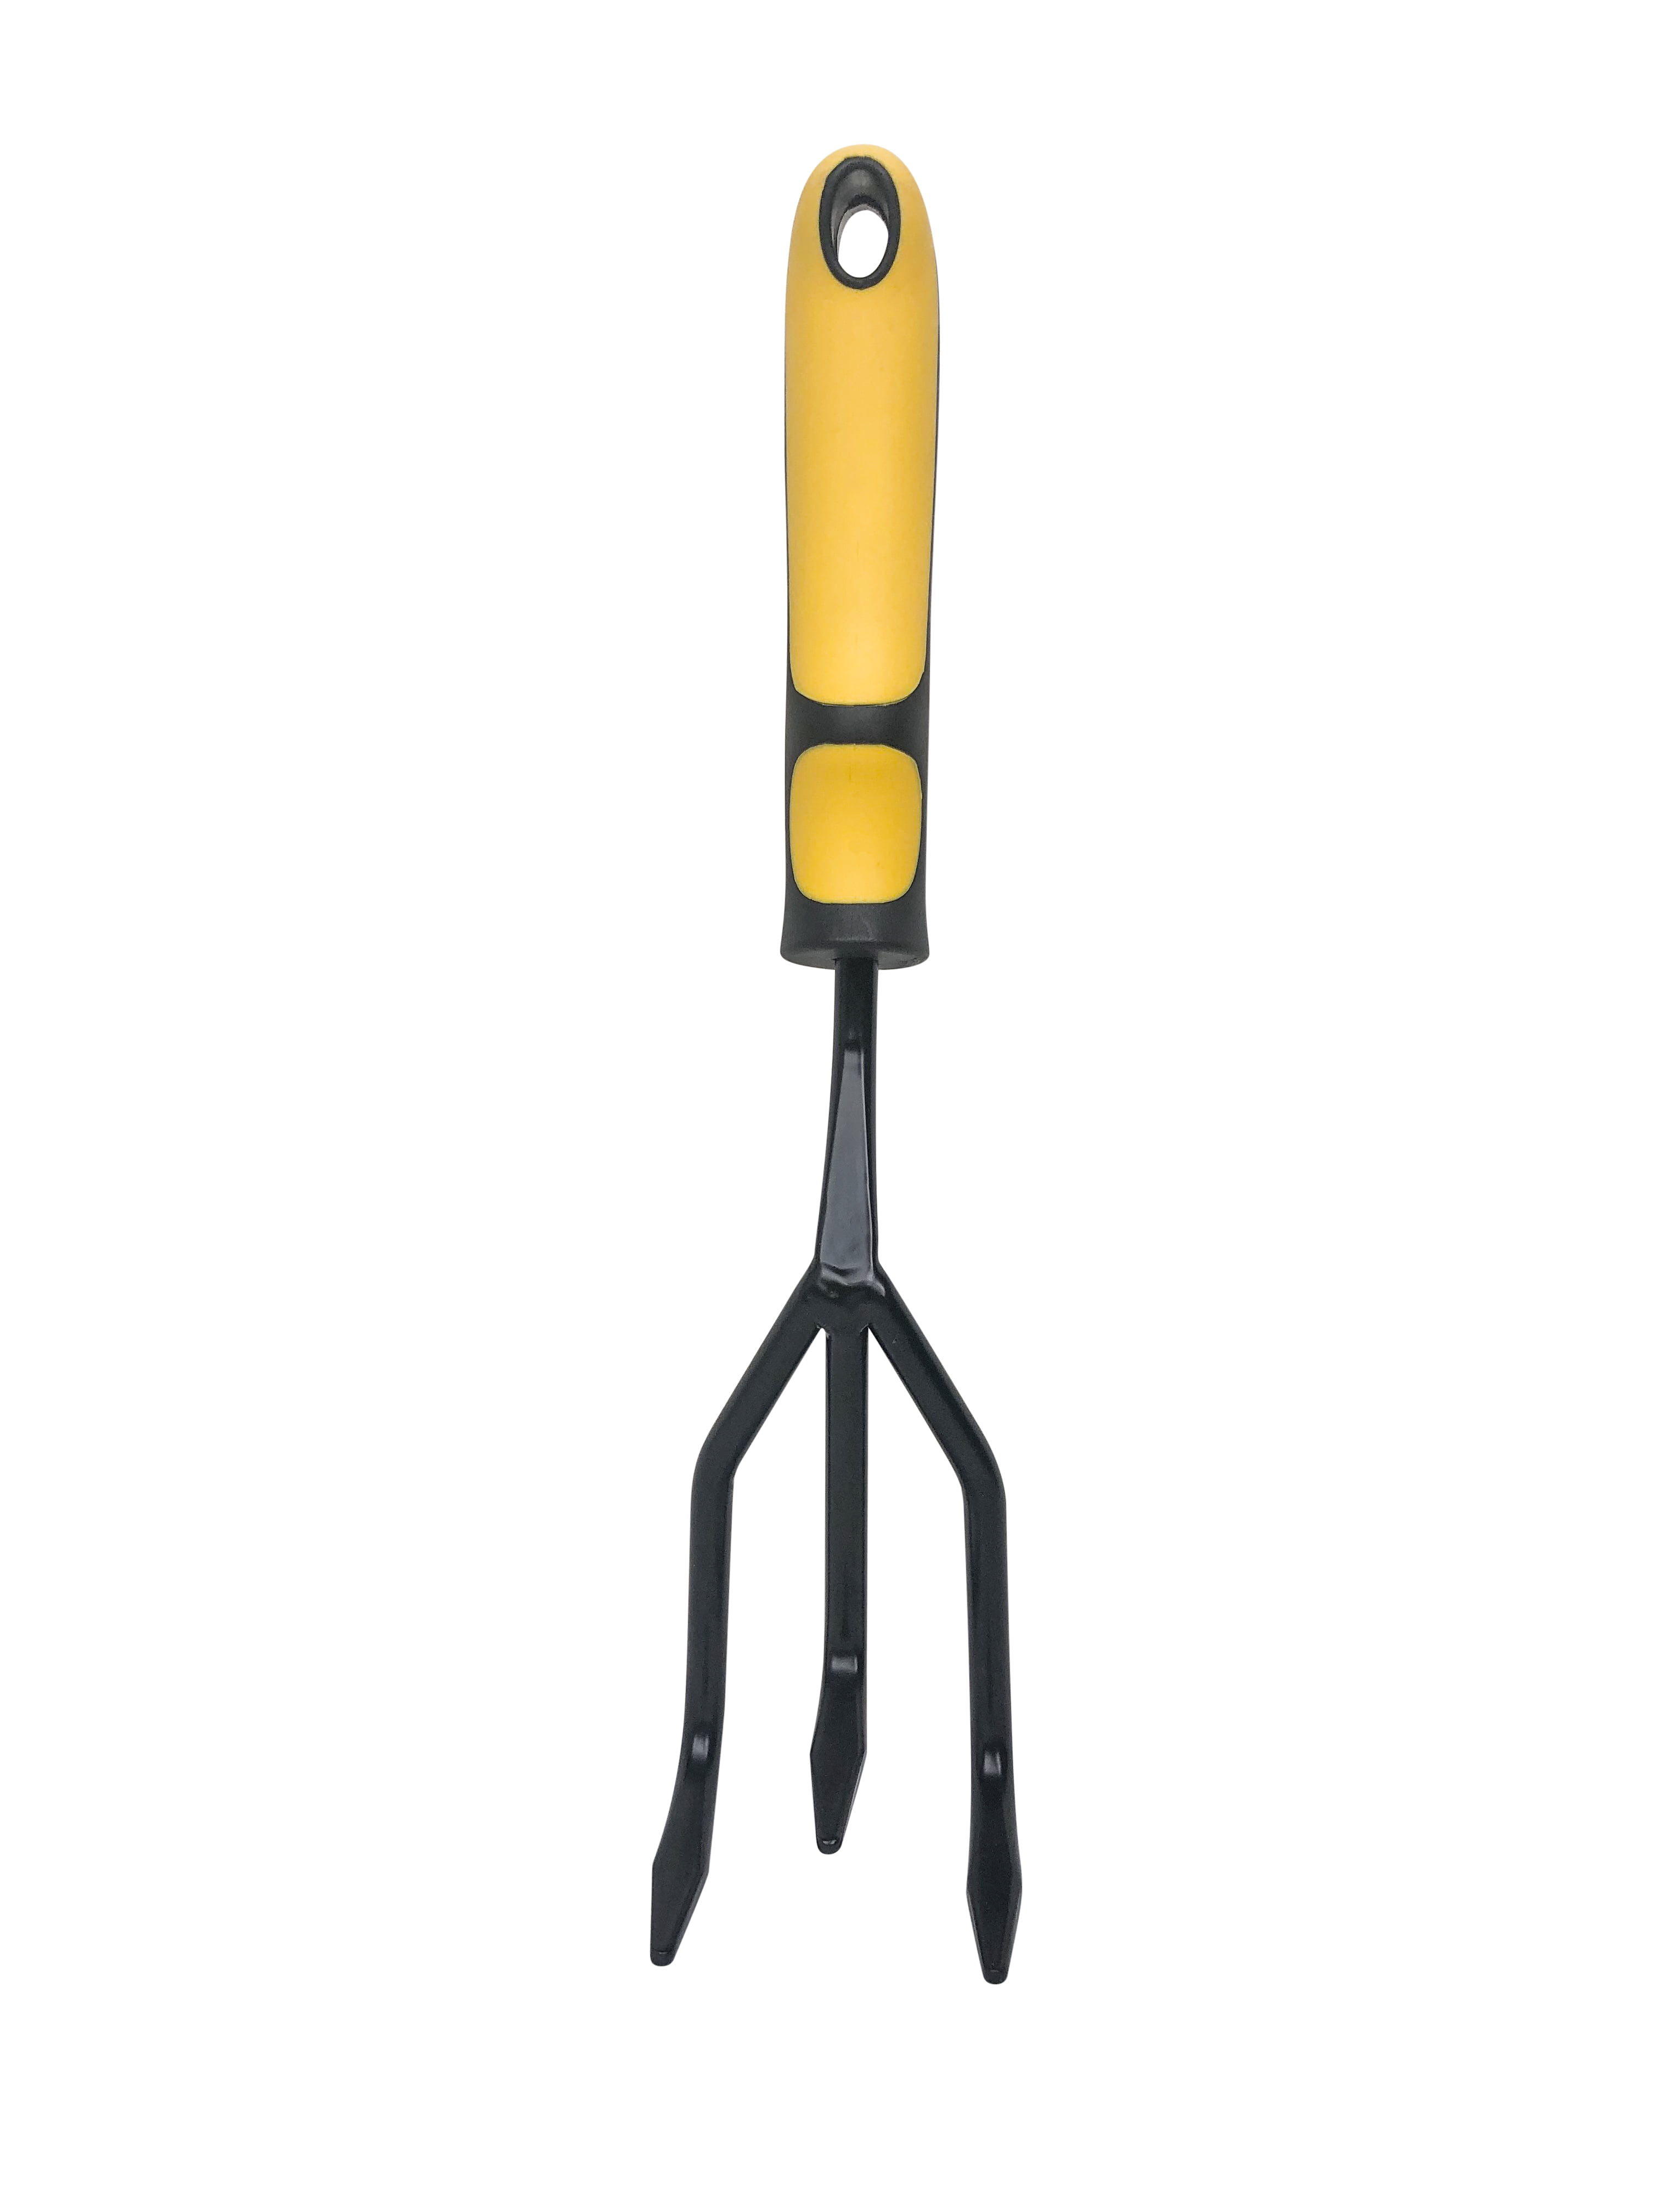 EG Expert Gardener 12.6 inch Steel Cultivator - Black and Yellow ...